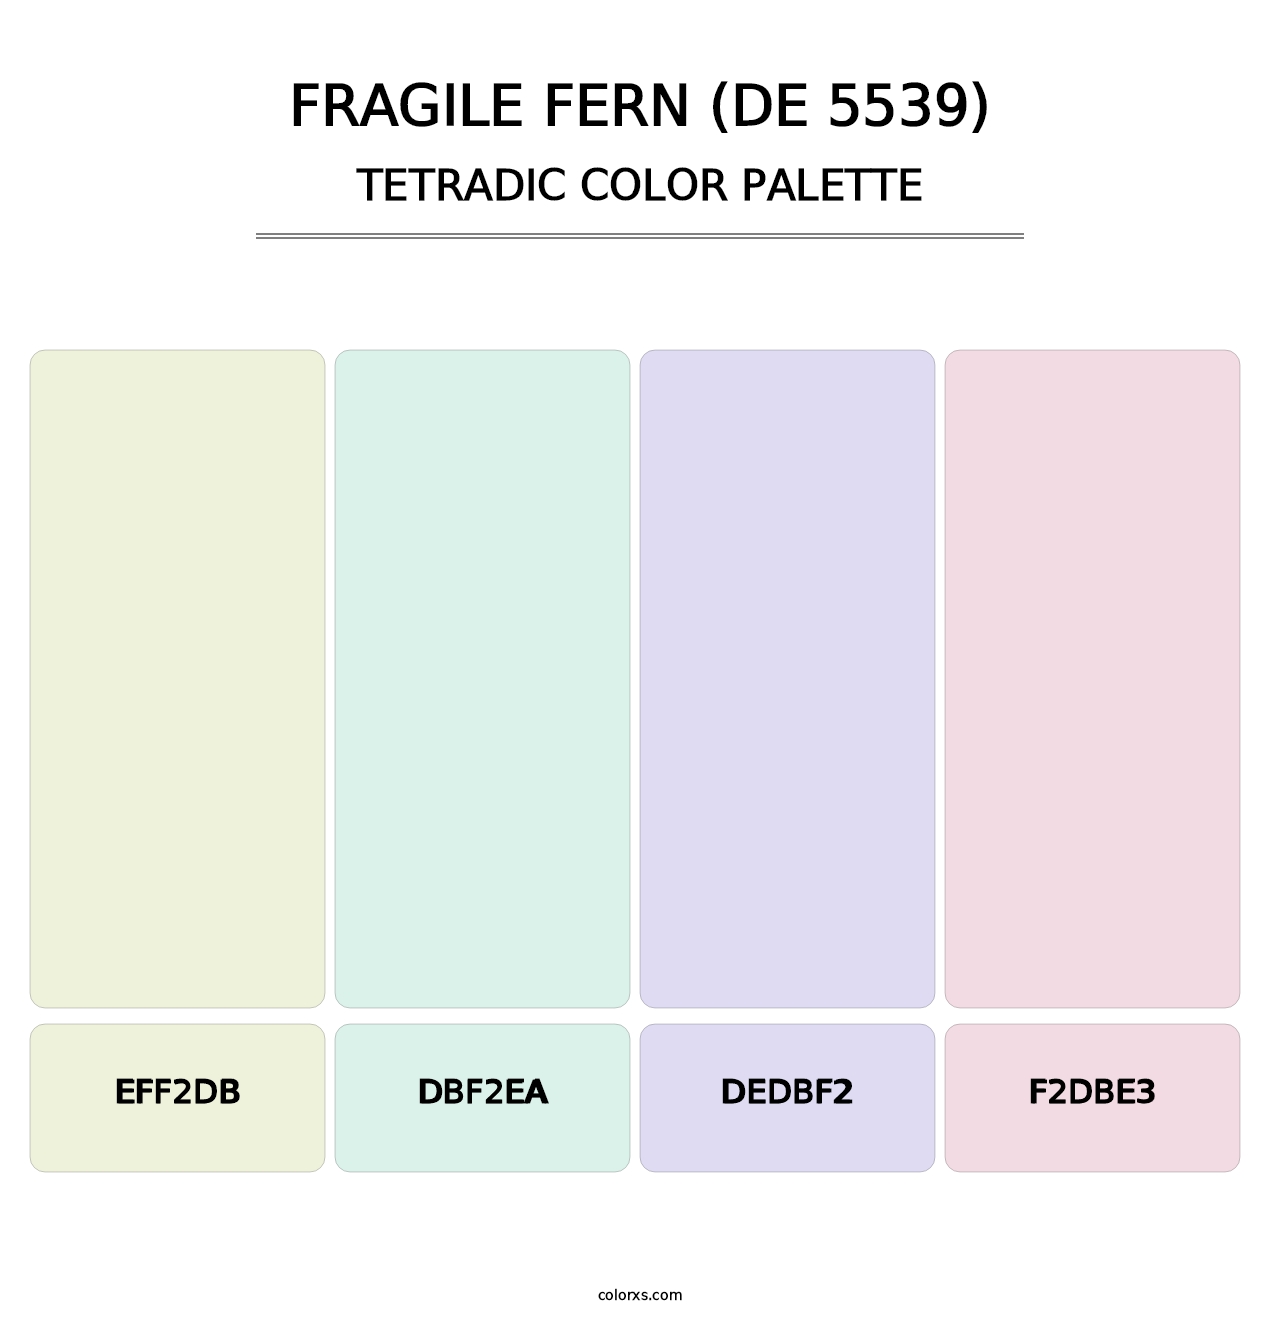 Fragile Fern (DE 5539) - Tetradic Color Palette